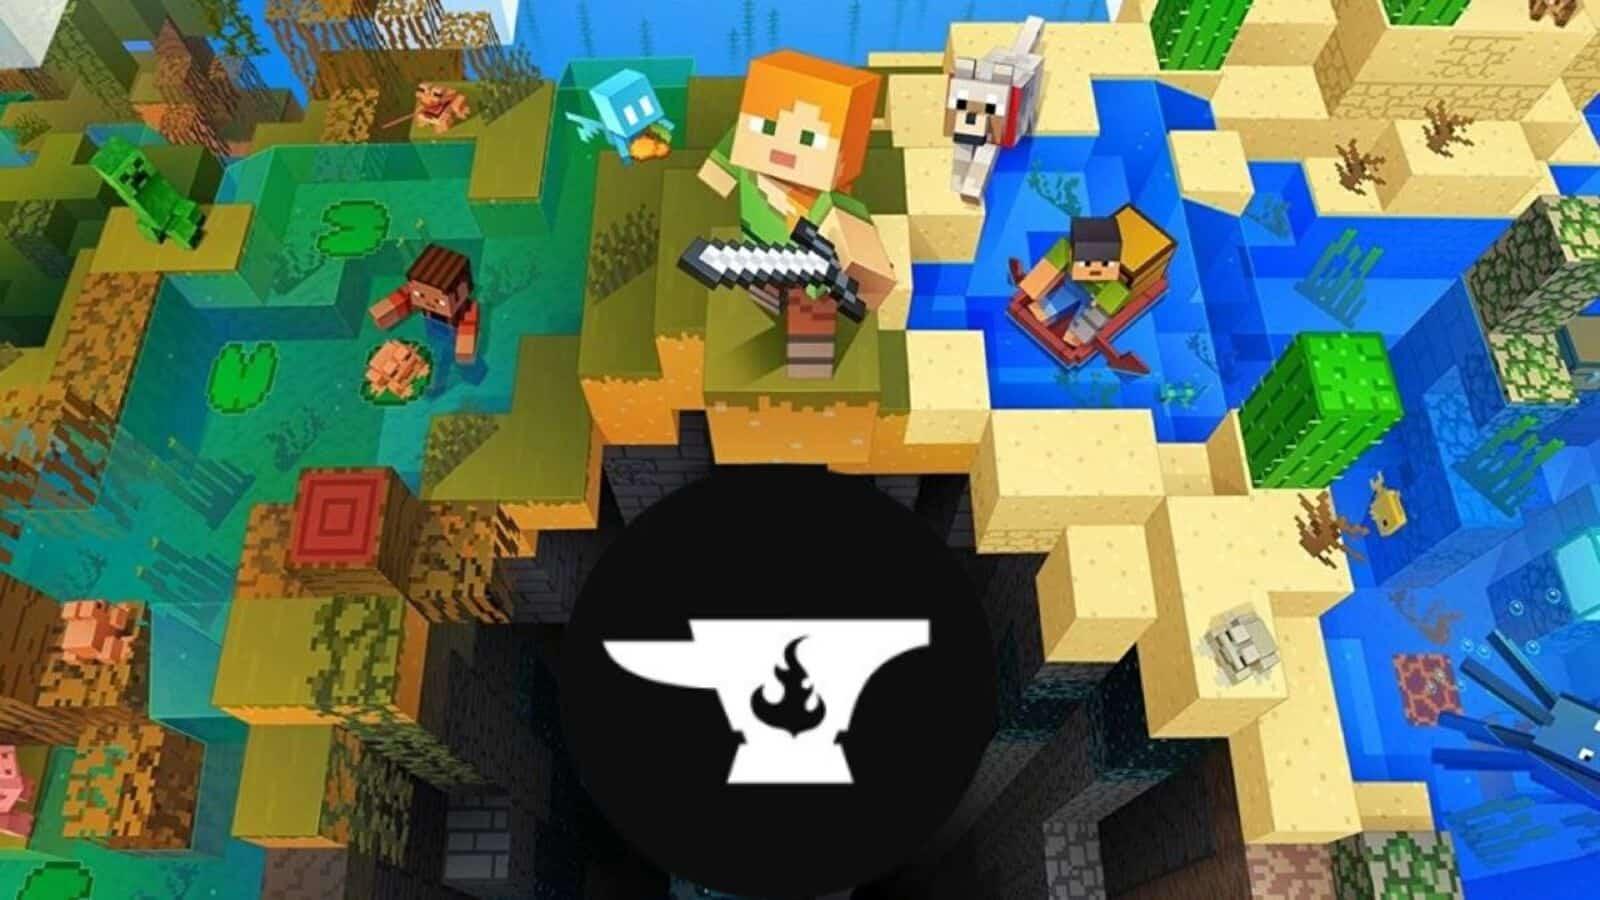 Pokeblock (Plan to Revive Next year!) - Minecraft Mods - CurseForge